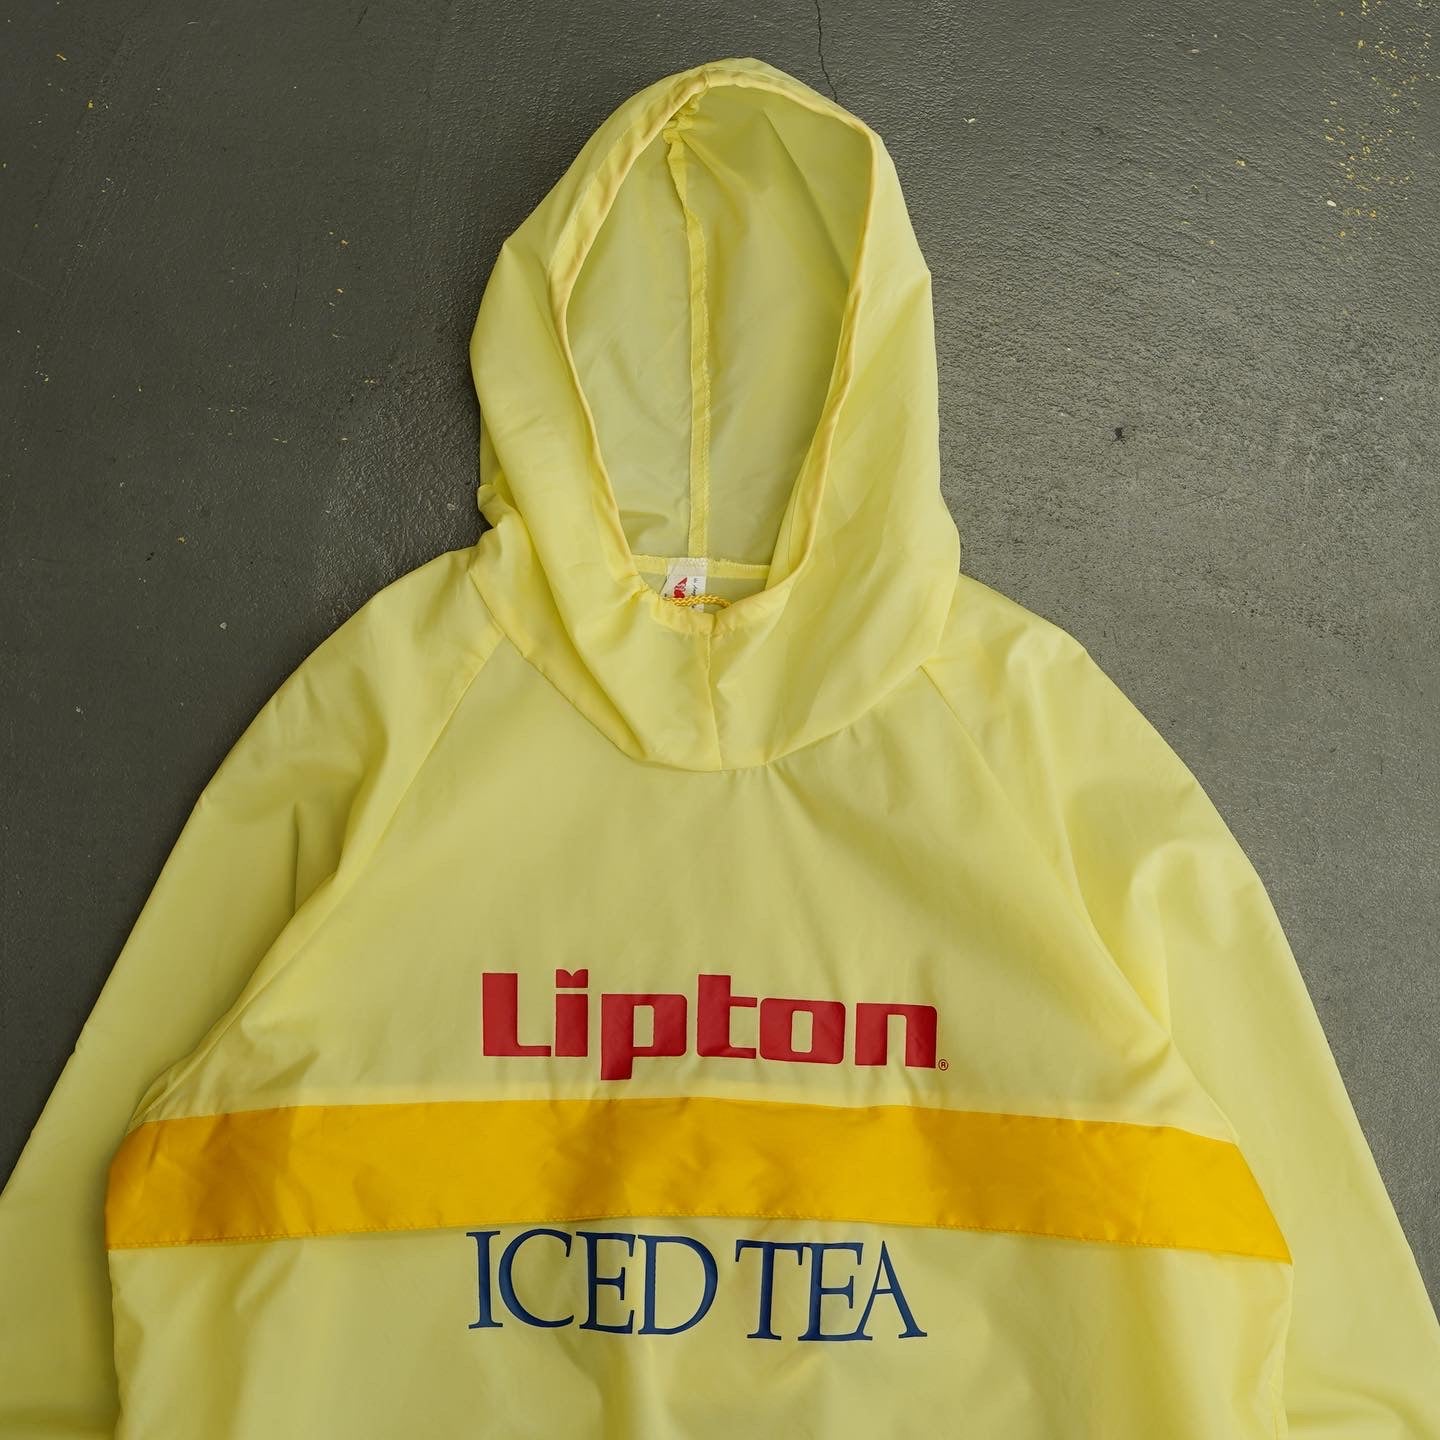 Lipton ICED TEA Packable Anorak